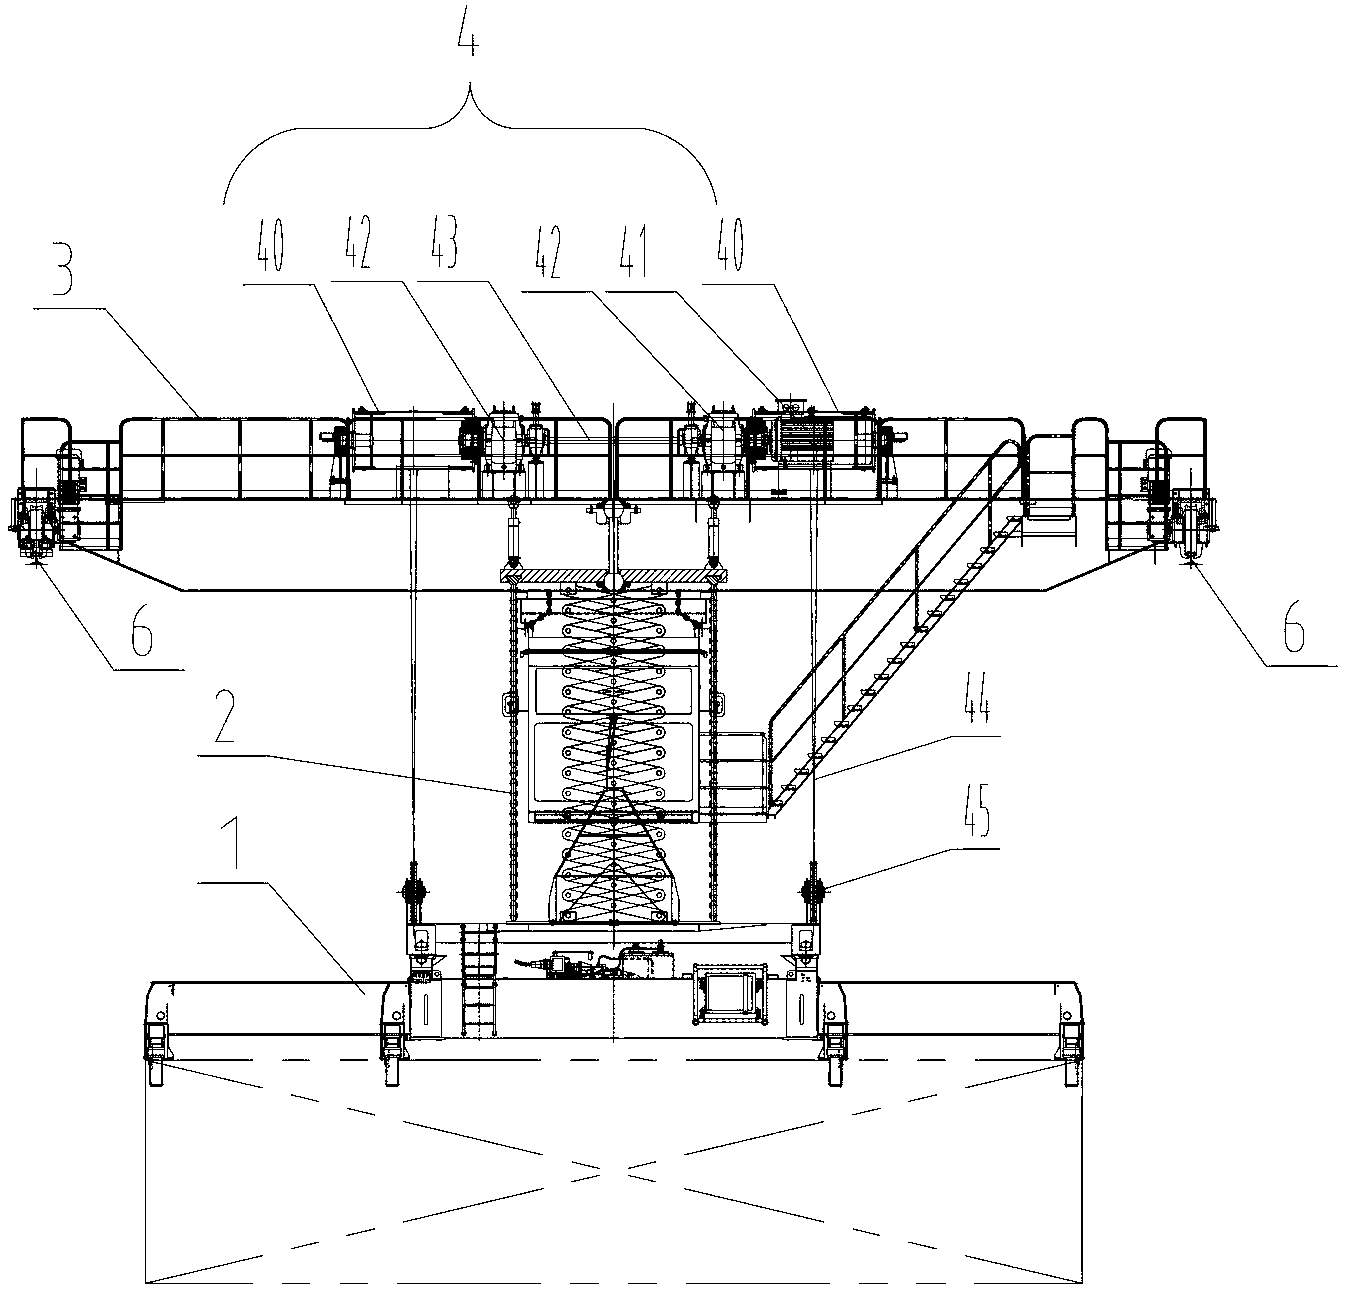 Hoisting mechanism and gantry crane